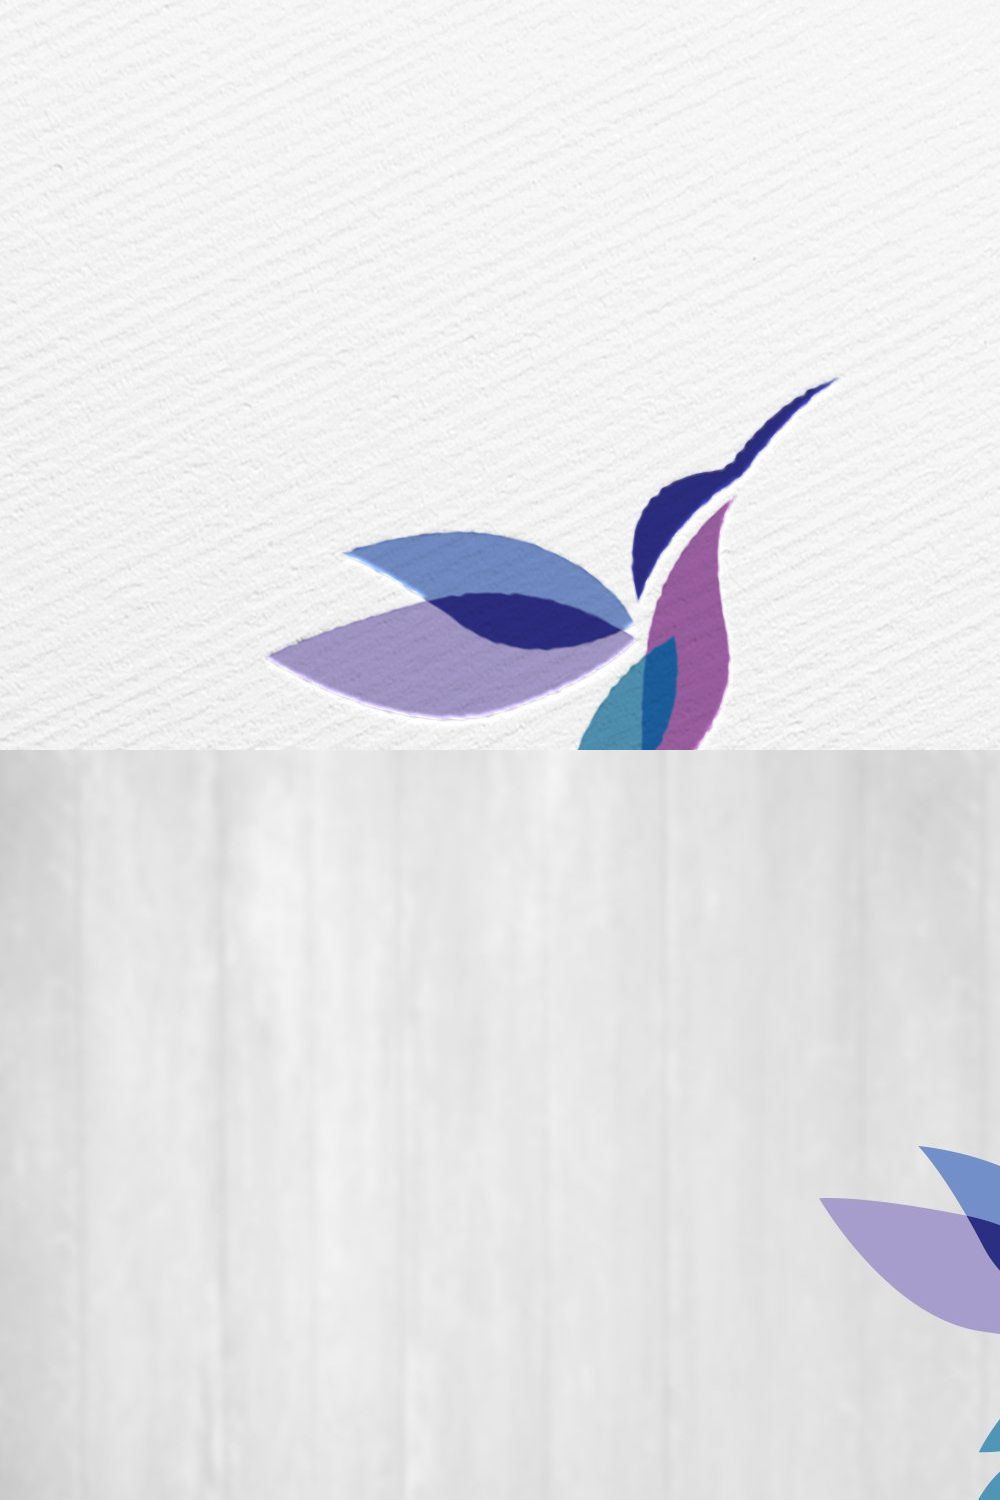 hummingbird logo pinterest preview image.